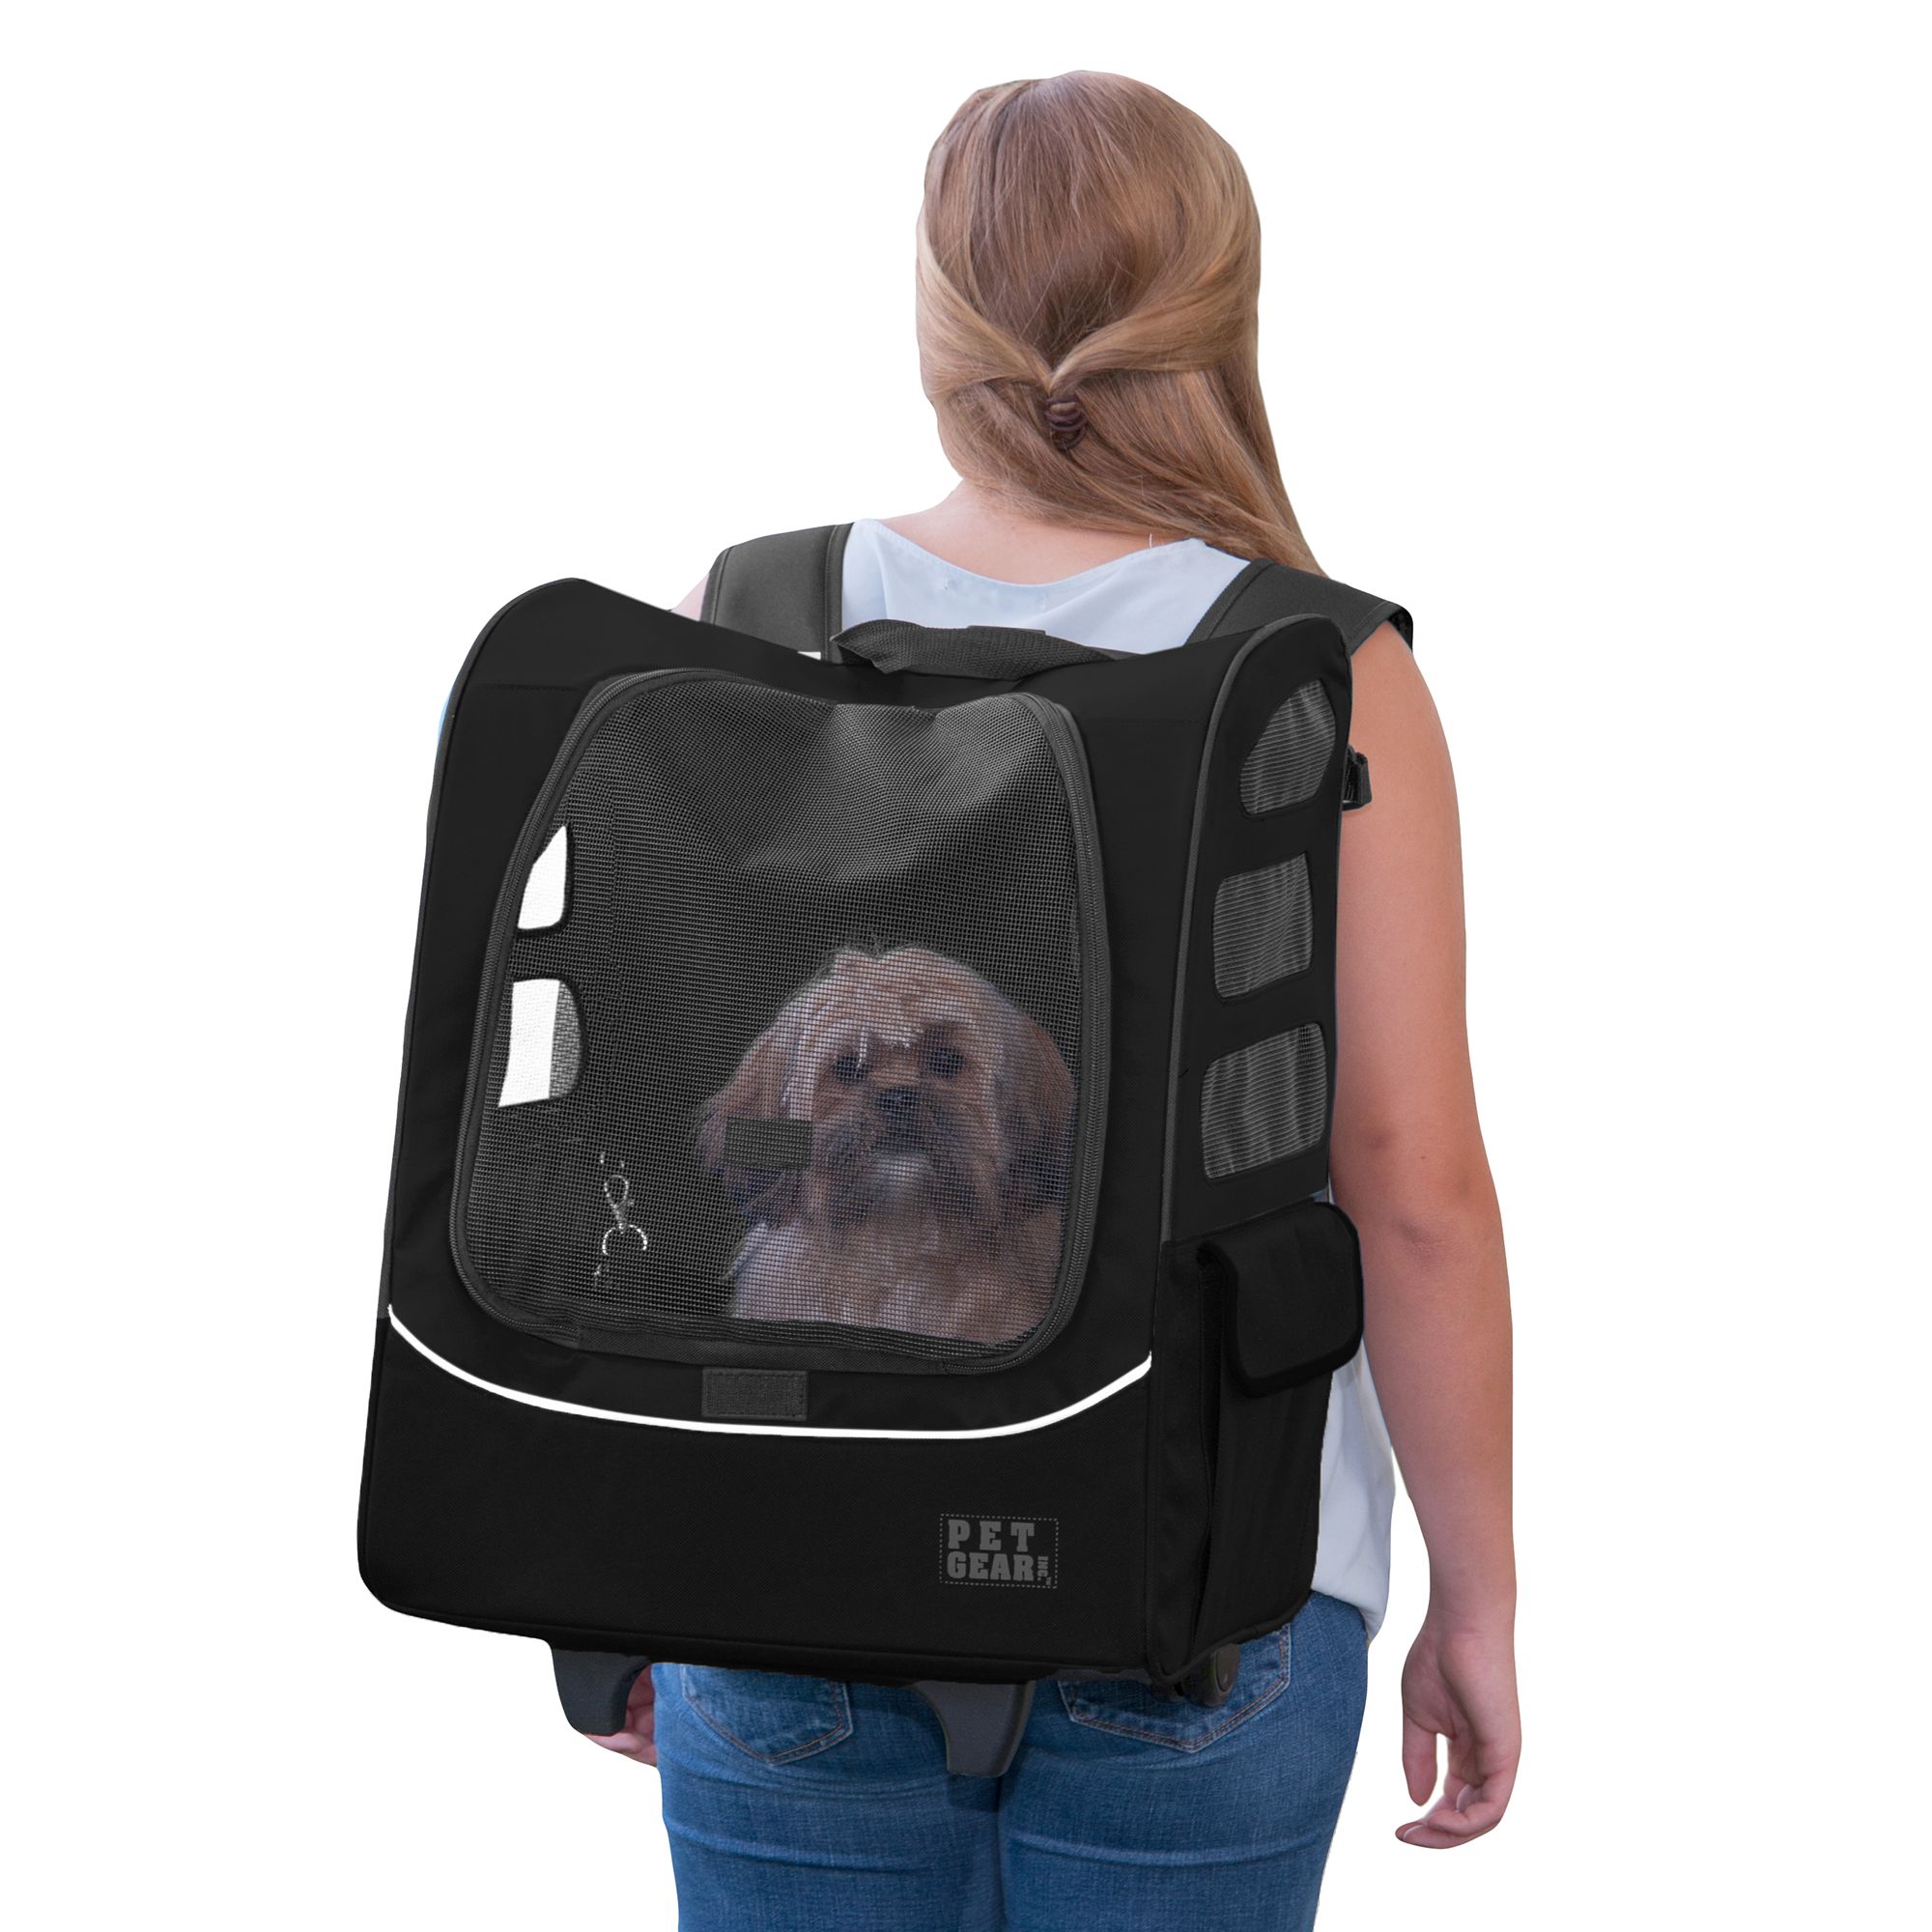 petsmart dog backpack